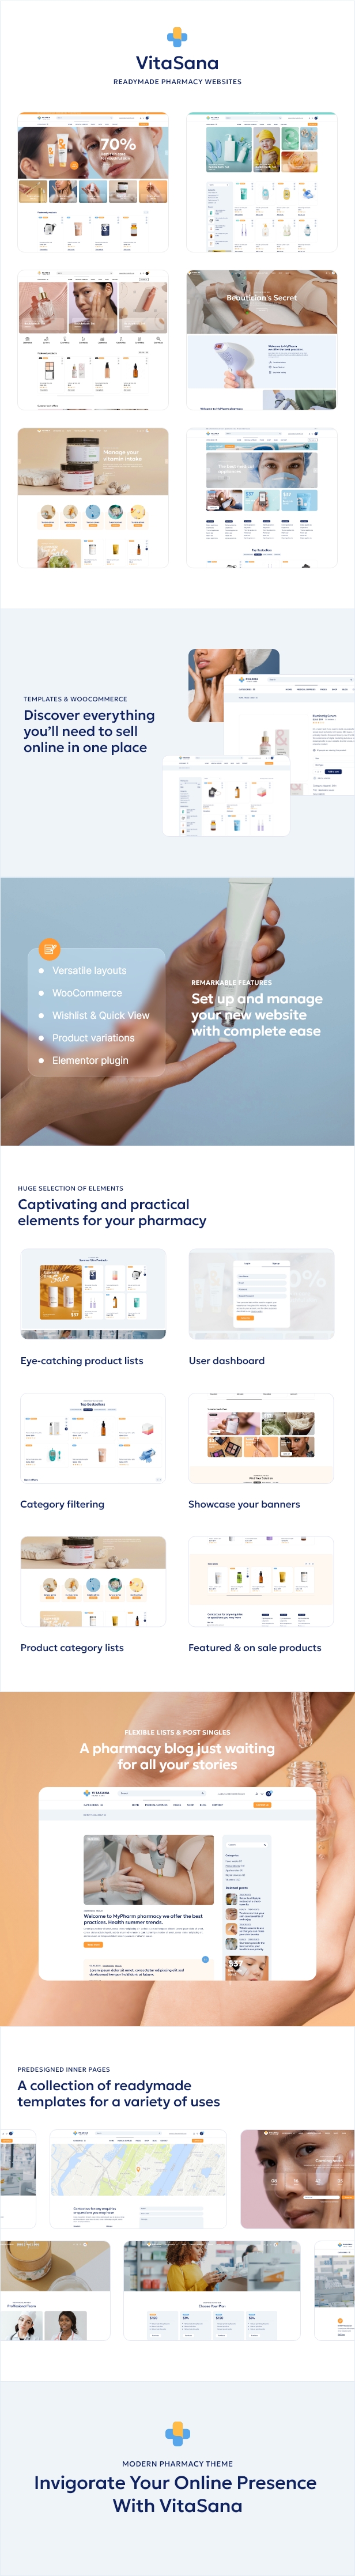 VitaSana - Pharmacy & Medical Store WordPress Theme - 1